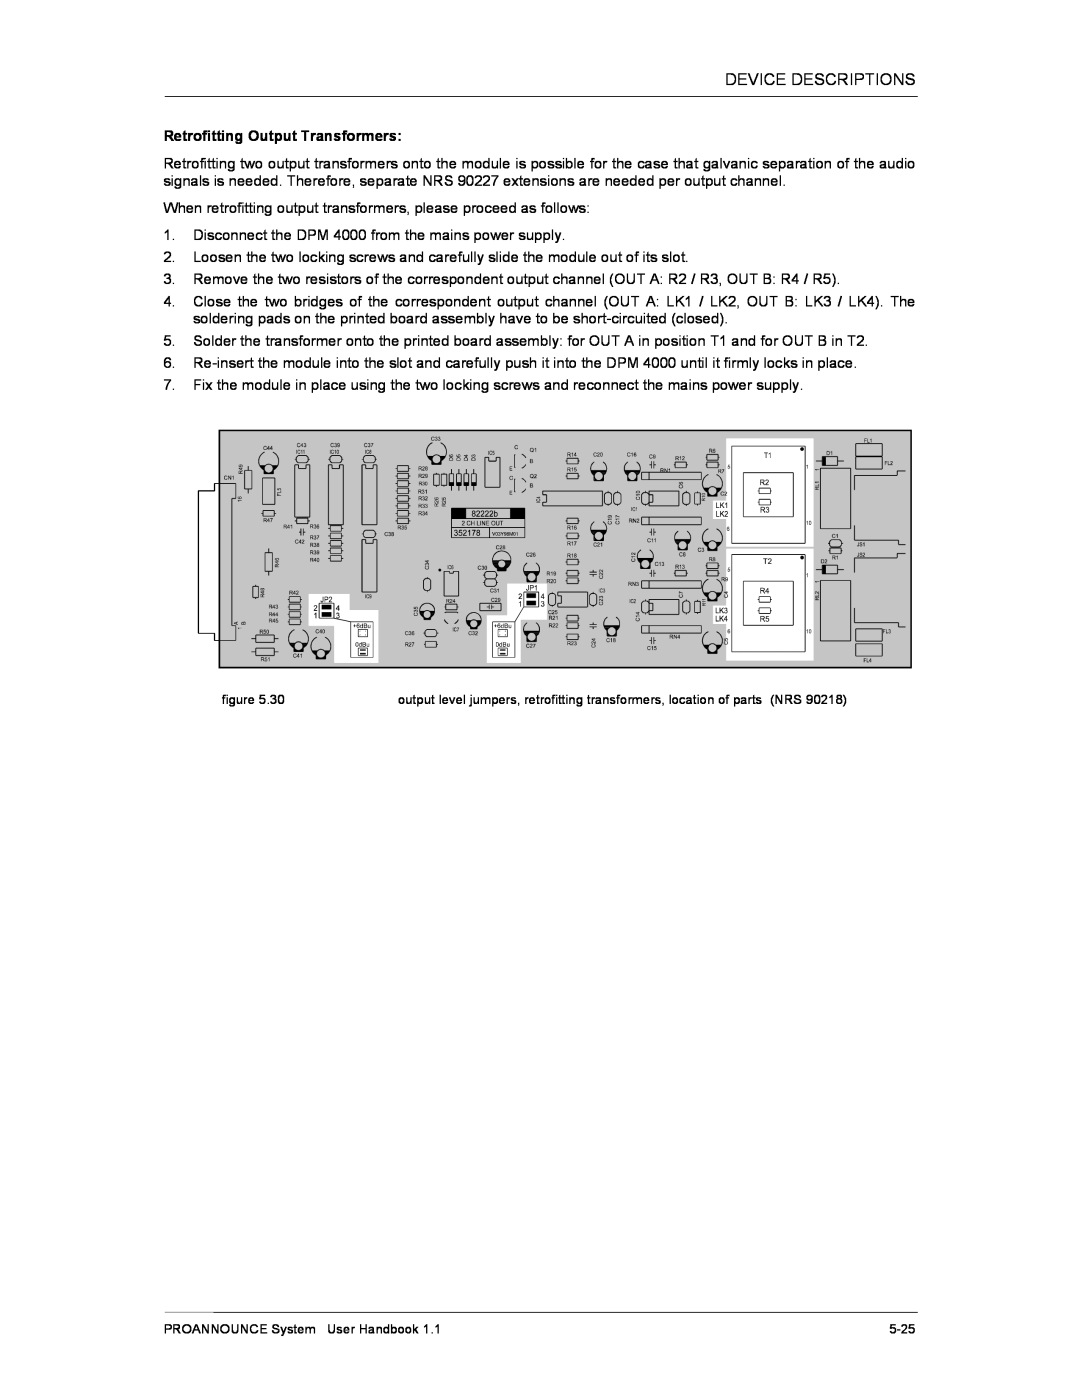 Dynacord DPM 4000 manual Retrofitting Output Transformers, PROANNOUNCE System User Handbook, 5-25 